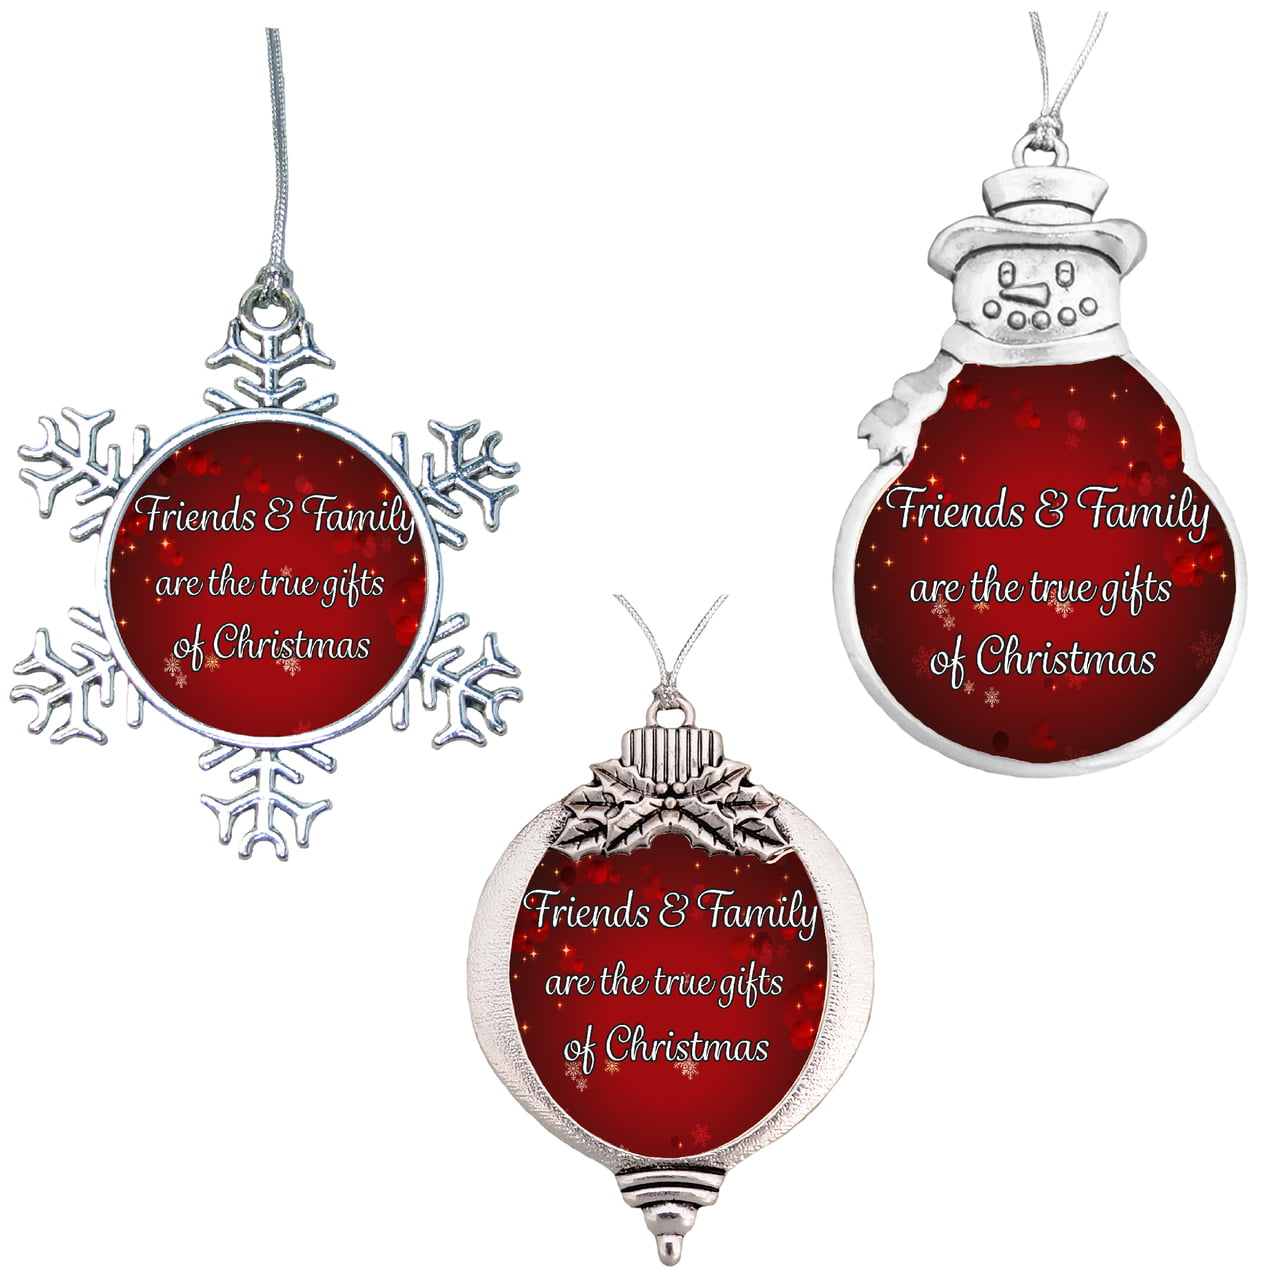 Sentimental Glass Mirrored Tea Light Holder Plaque Ornament Christmas Gift 